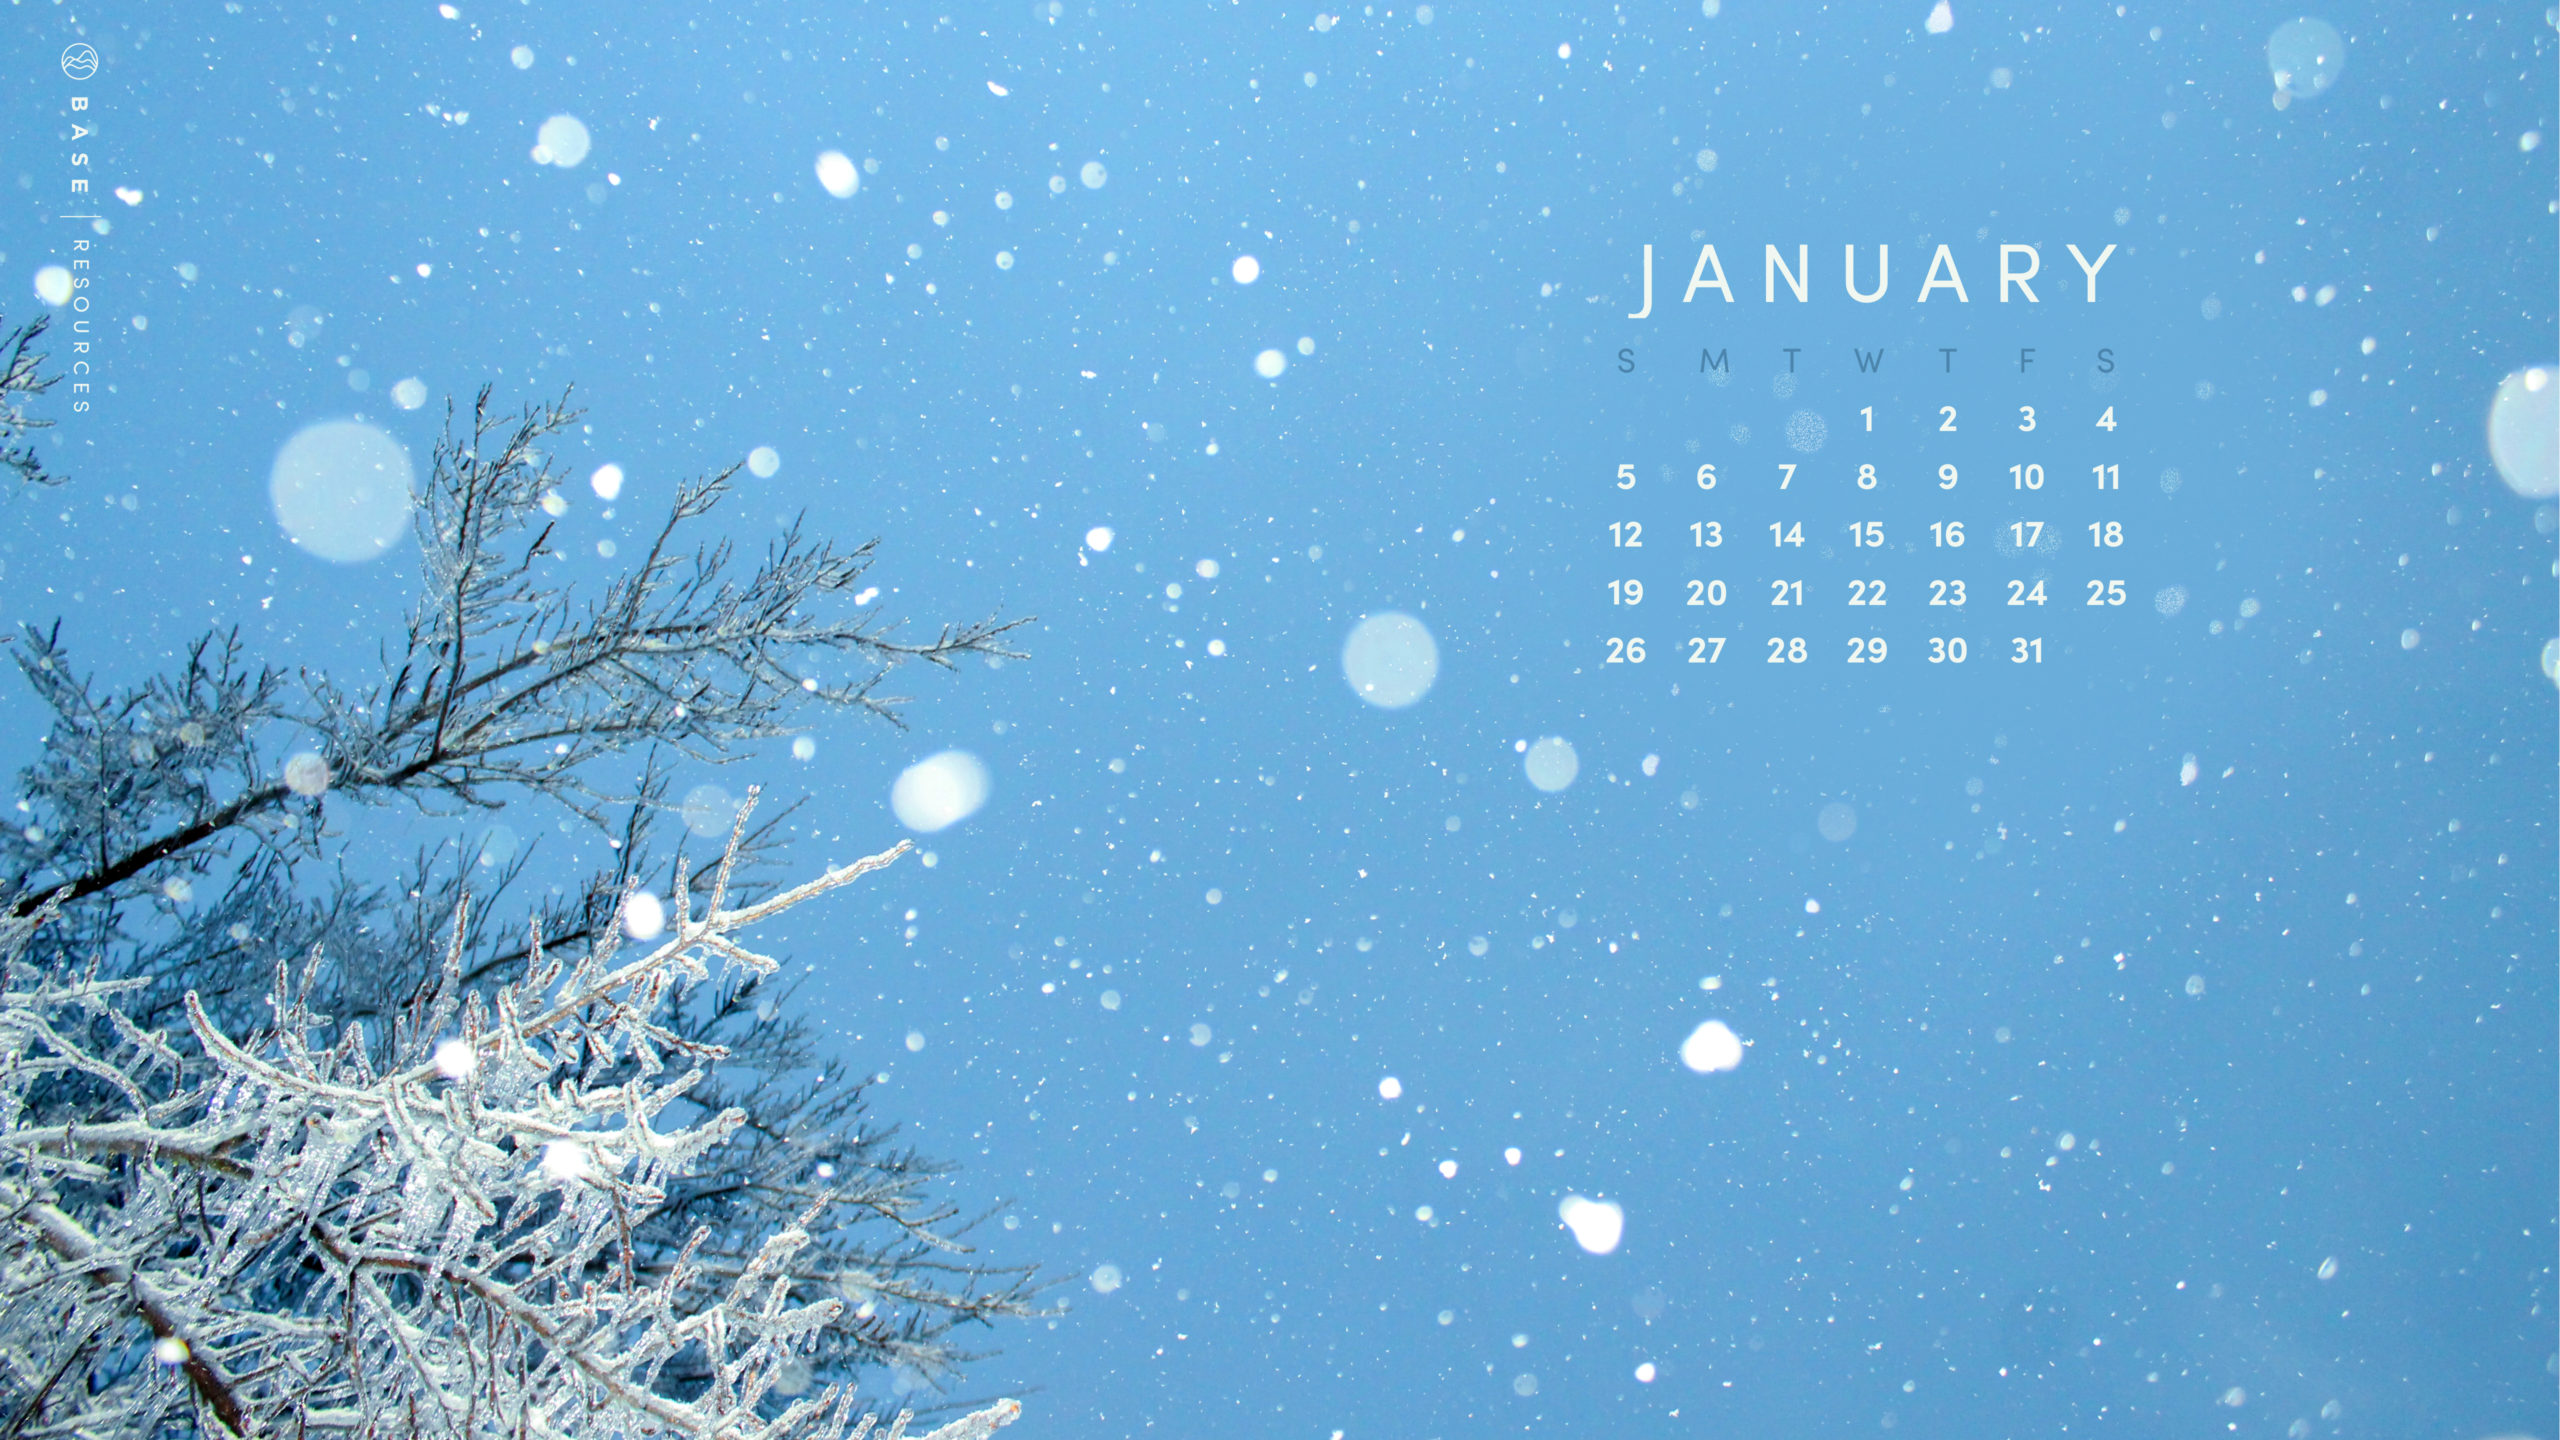 Cute January Desktop Wallpaper 2020 - HD Wallpaper 